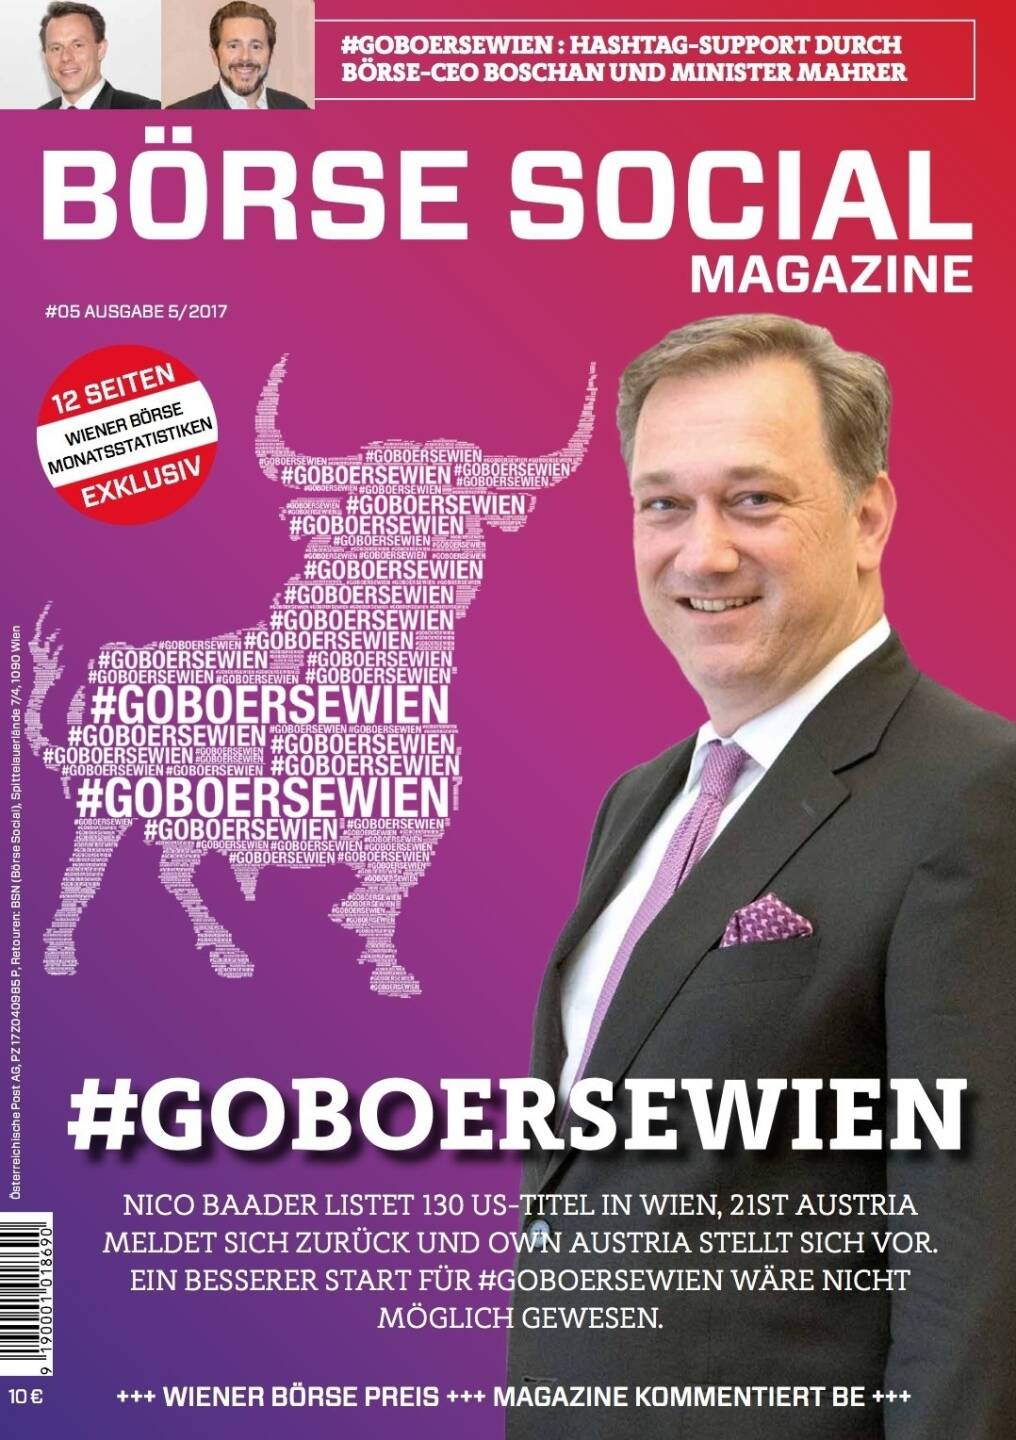 Börse Social Magazine #5